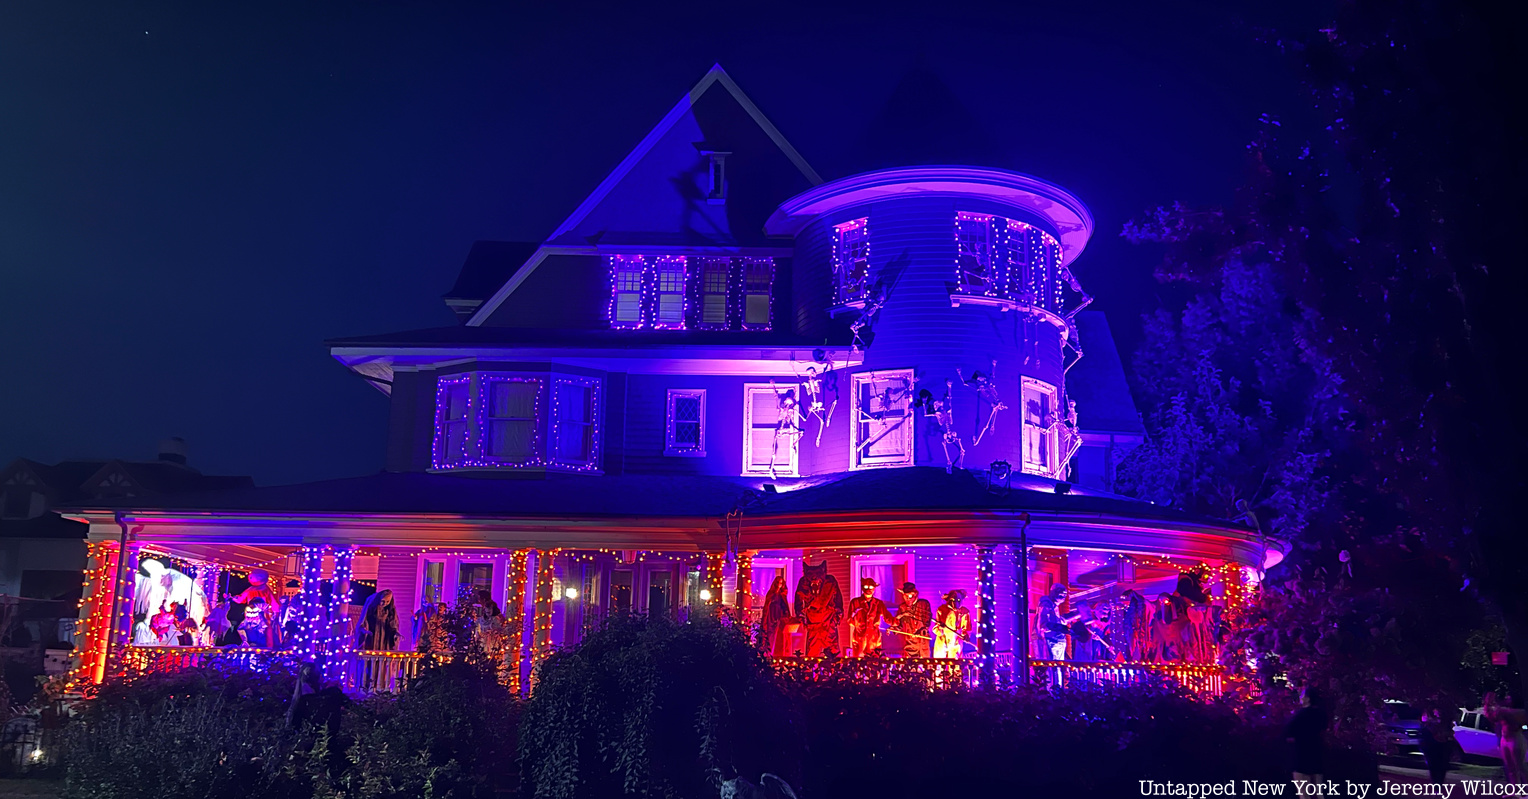 Flatbush halloween House